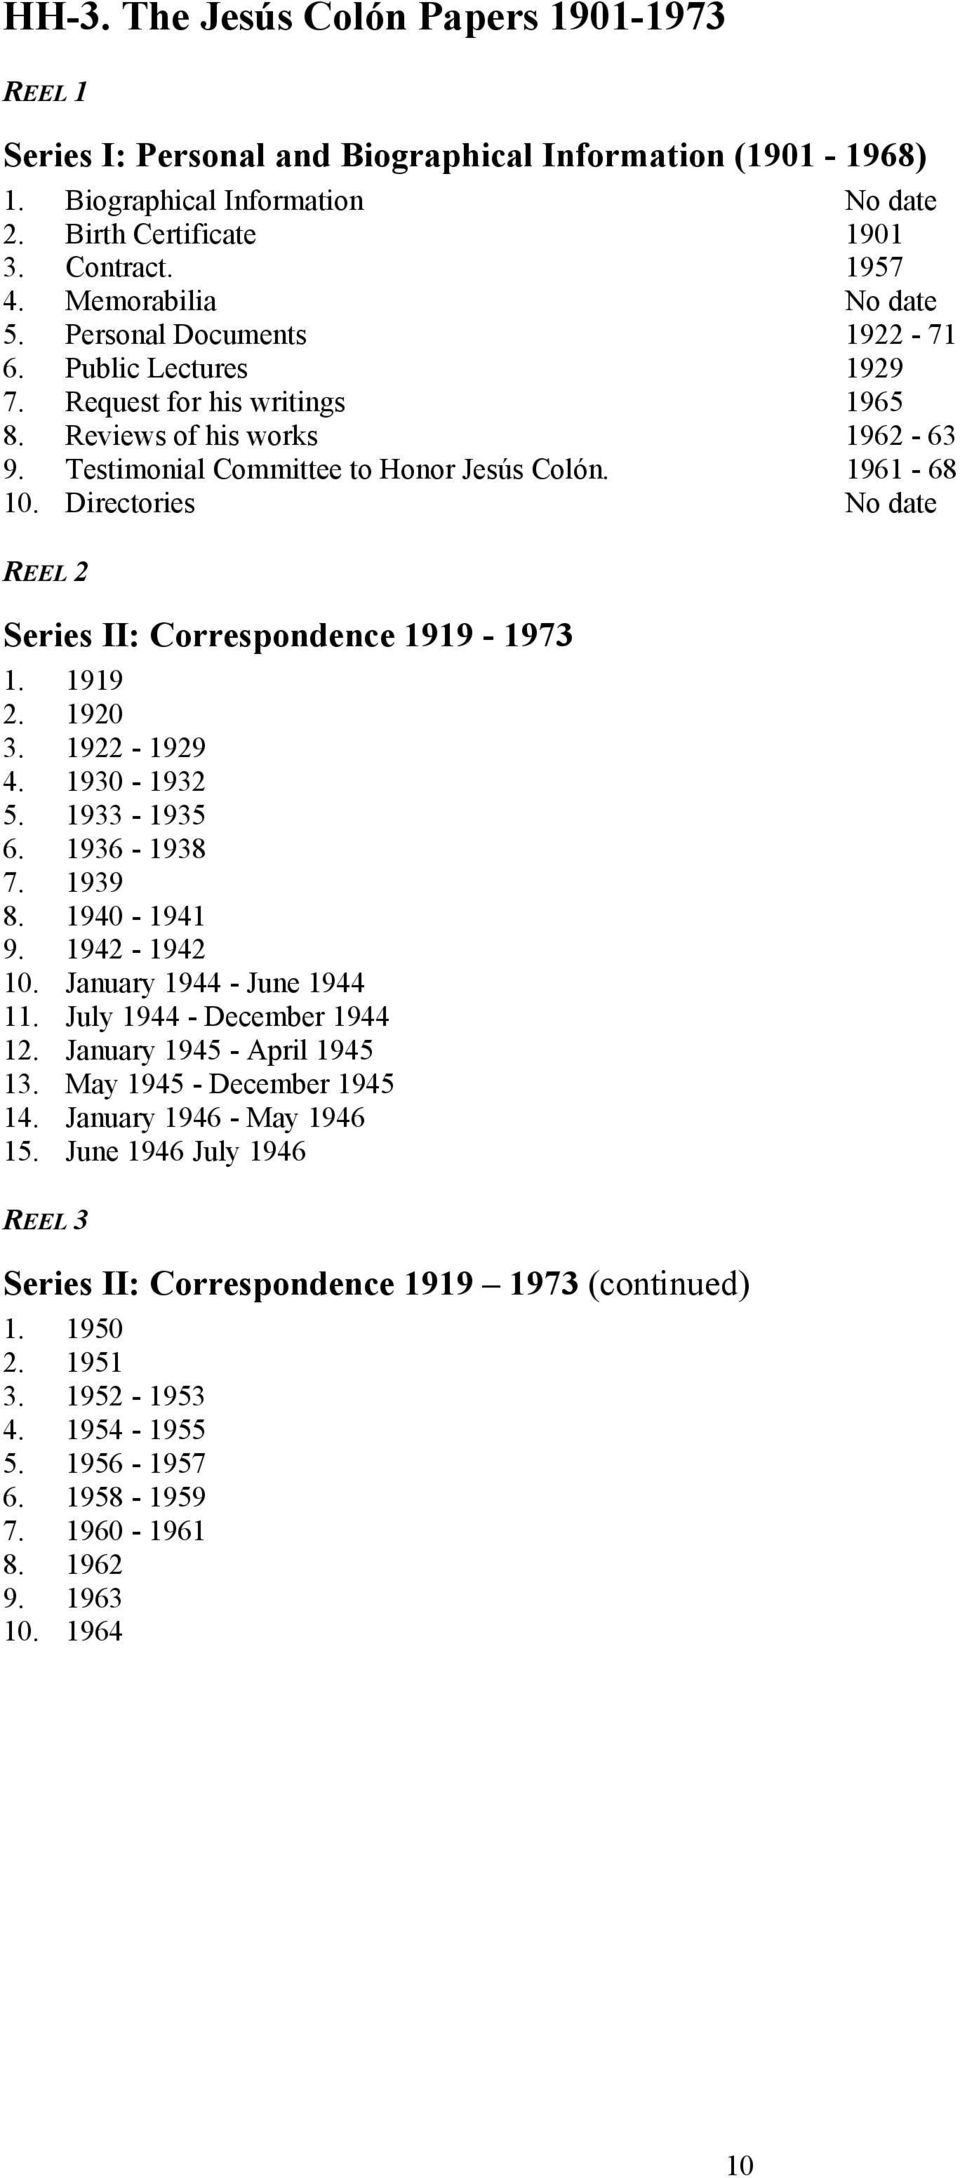 Directories No date REEL 2 Series II: Correspondence 1919-1973 1. 1919 2. 1920 3. 1922-1929 4. 1930-1932 5. 1933-1935 6. 1936-1938 7. 1939 8. 1940-1941 9. 1942-1942 10. January 1944 - June 1944 11.